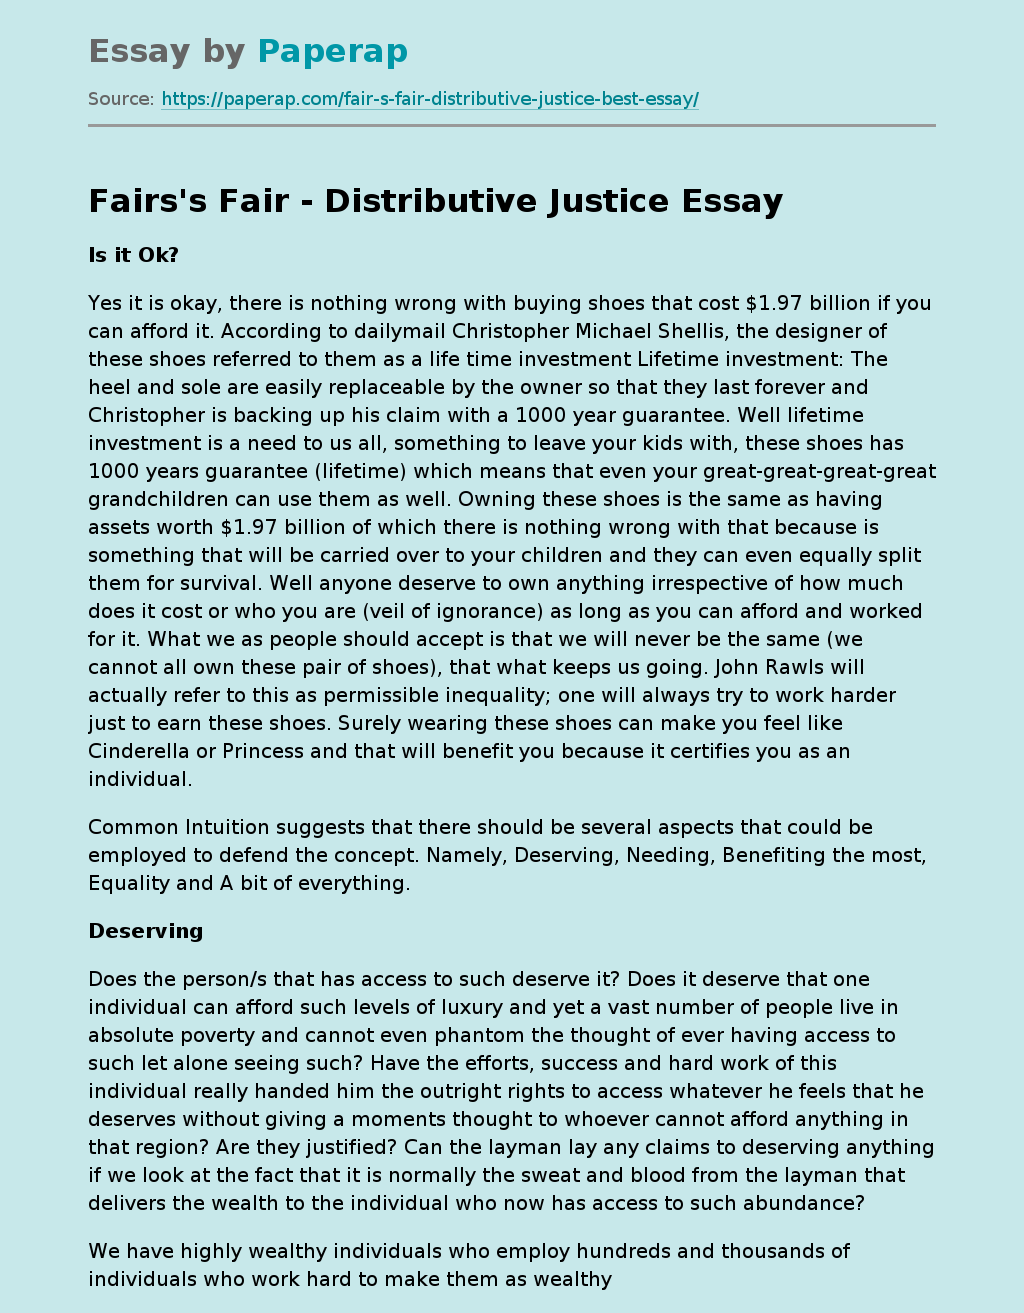 Fairs's Fair - Distributive Justice